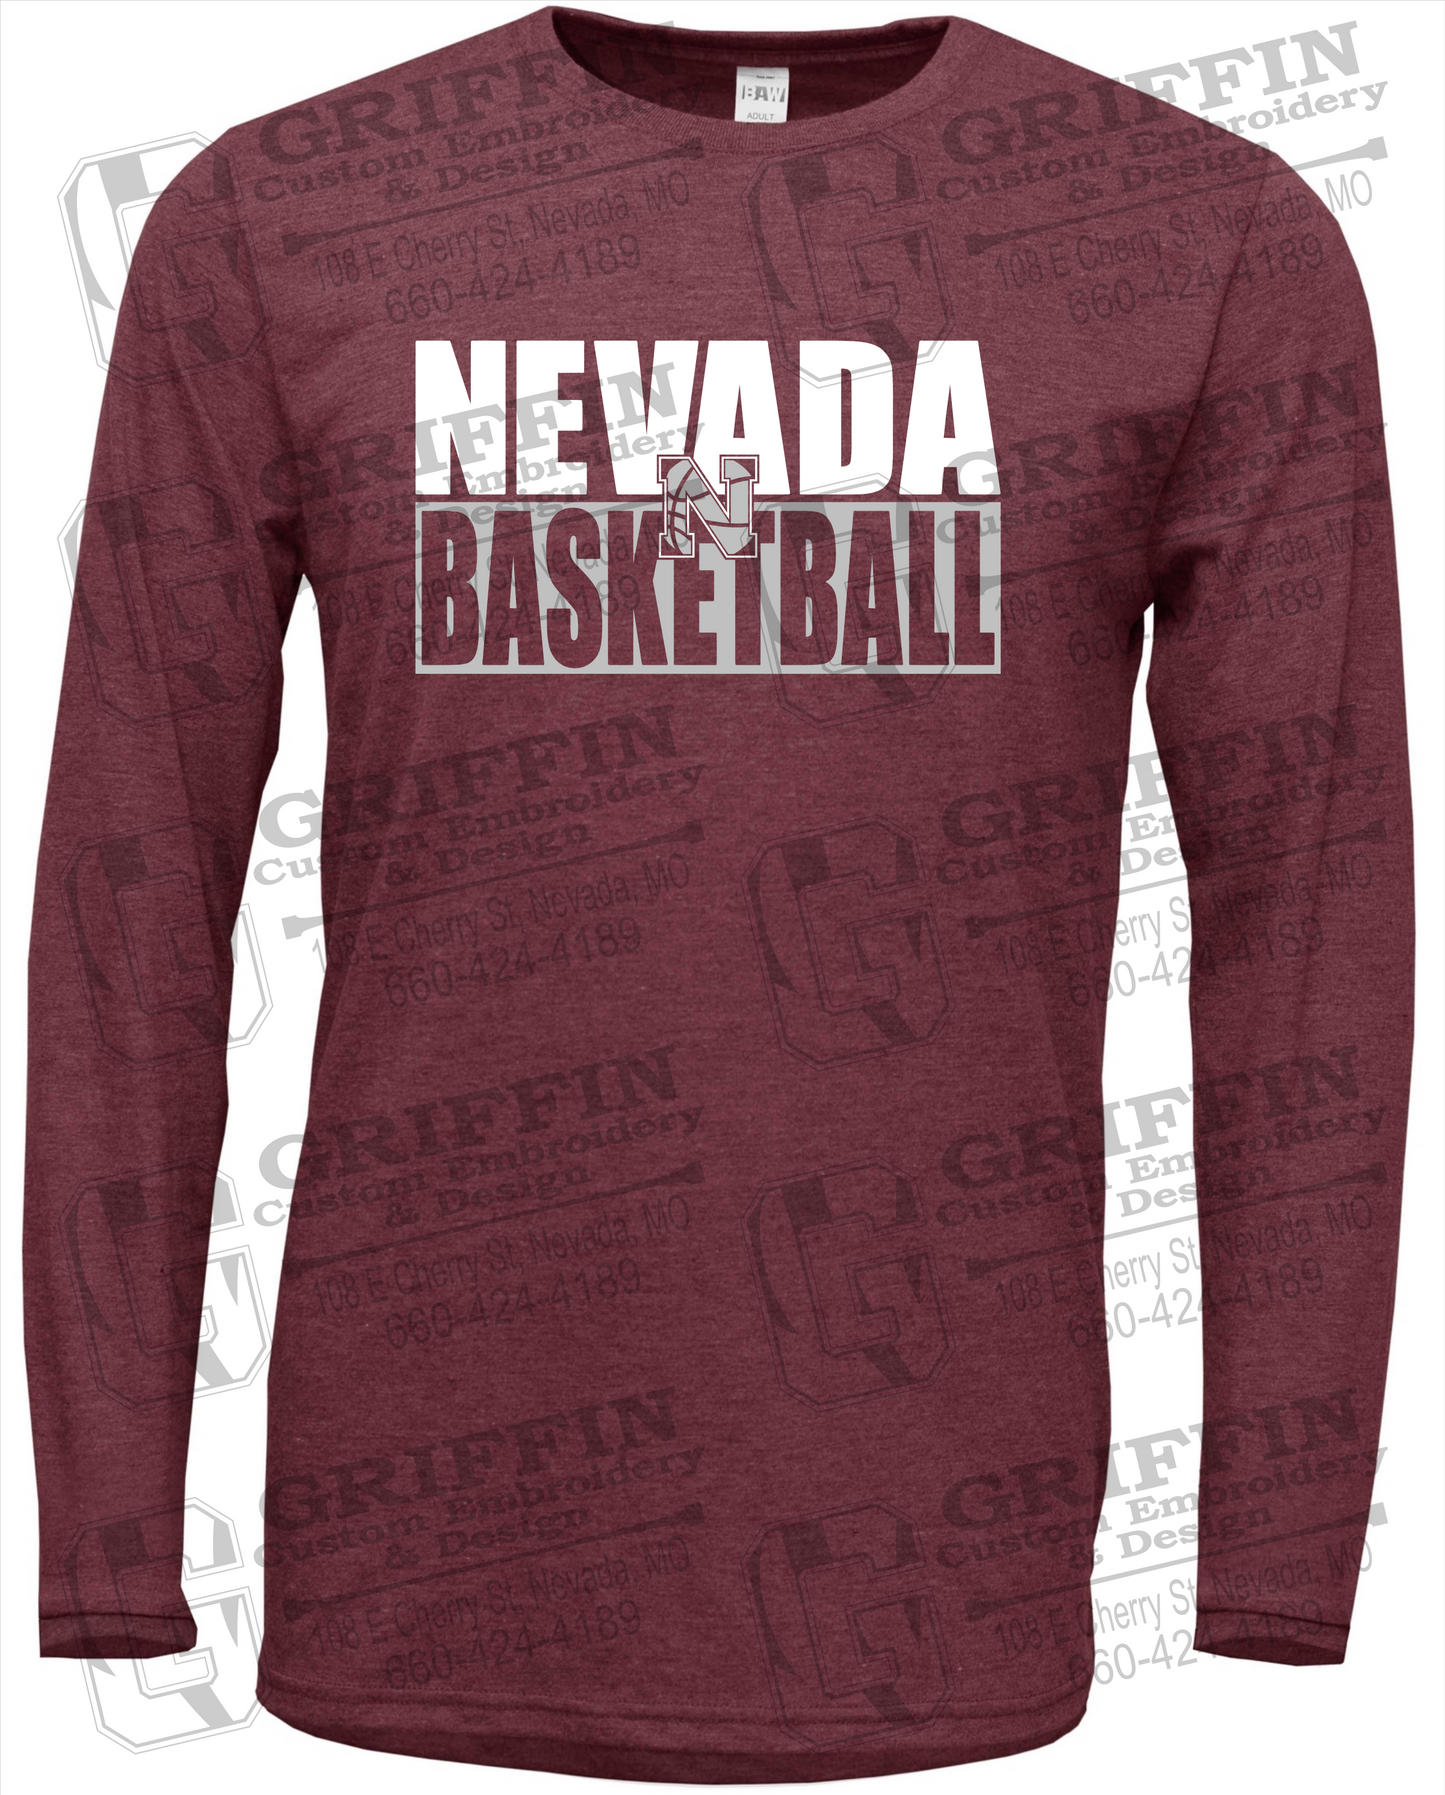 Soft-Tek Long Sleeve T-Shirt - Basketball - Nevada Tigers 21-Q